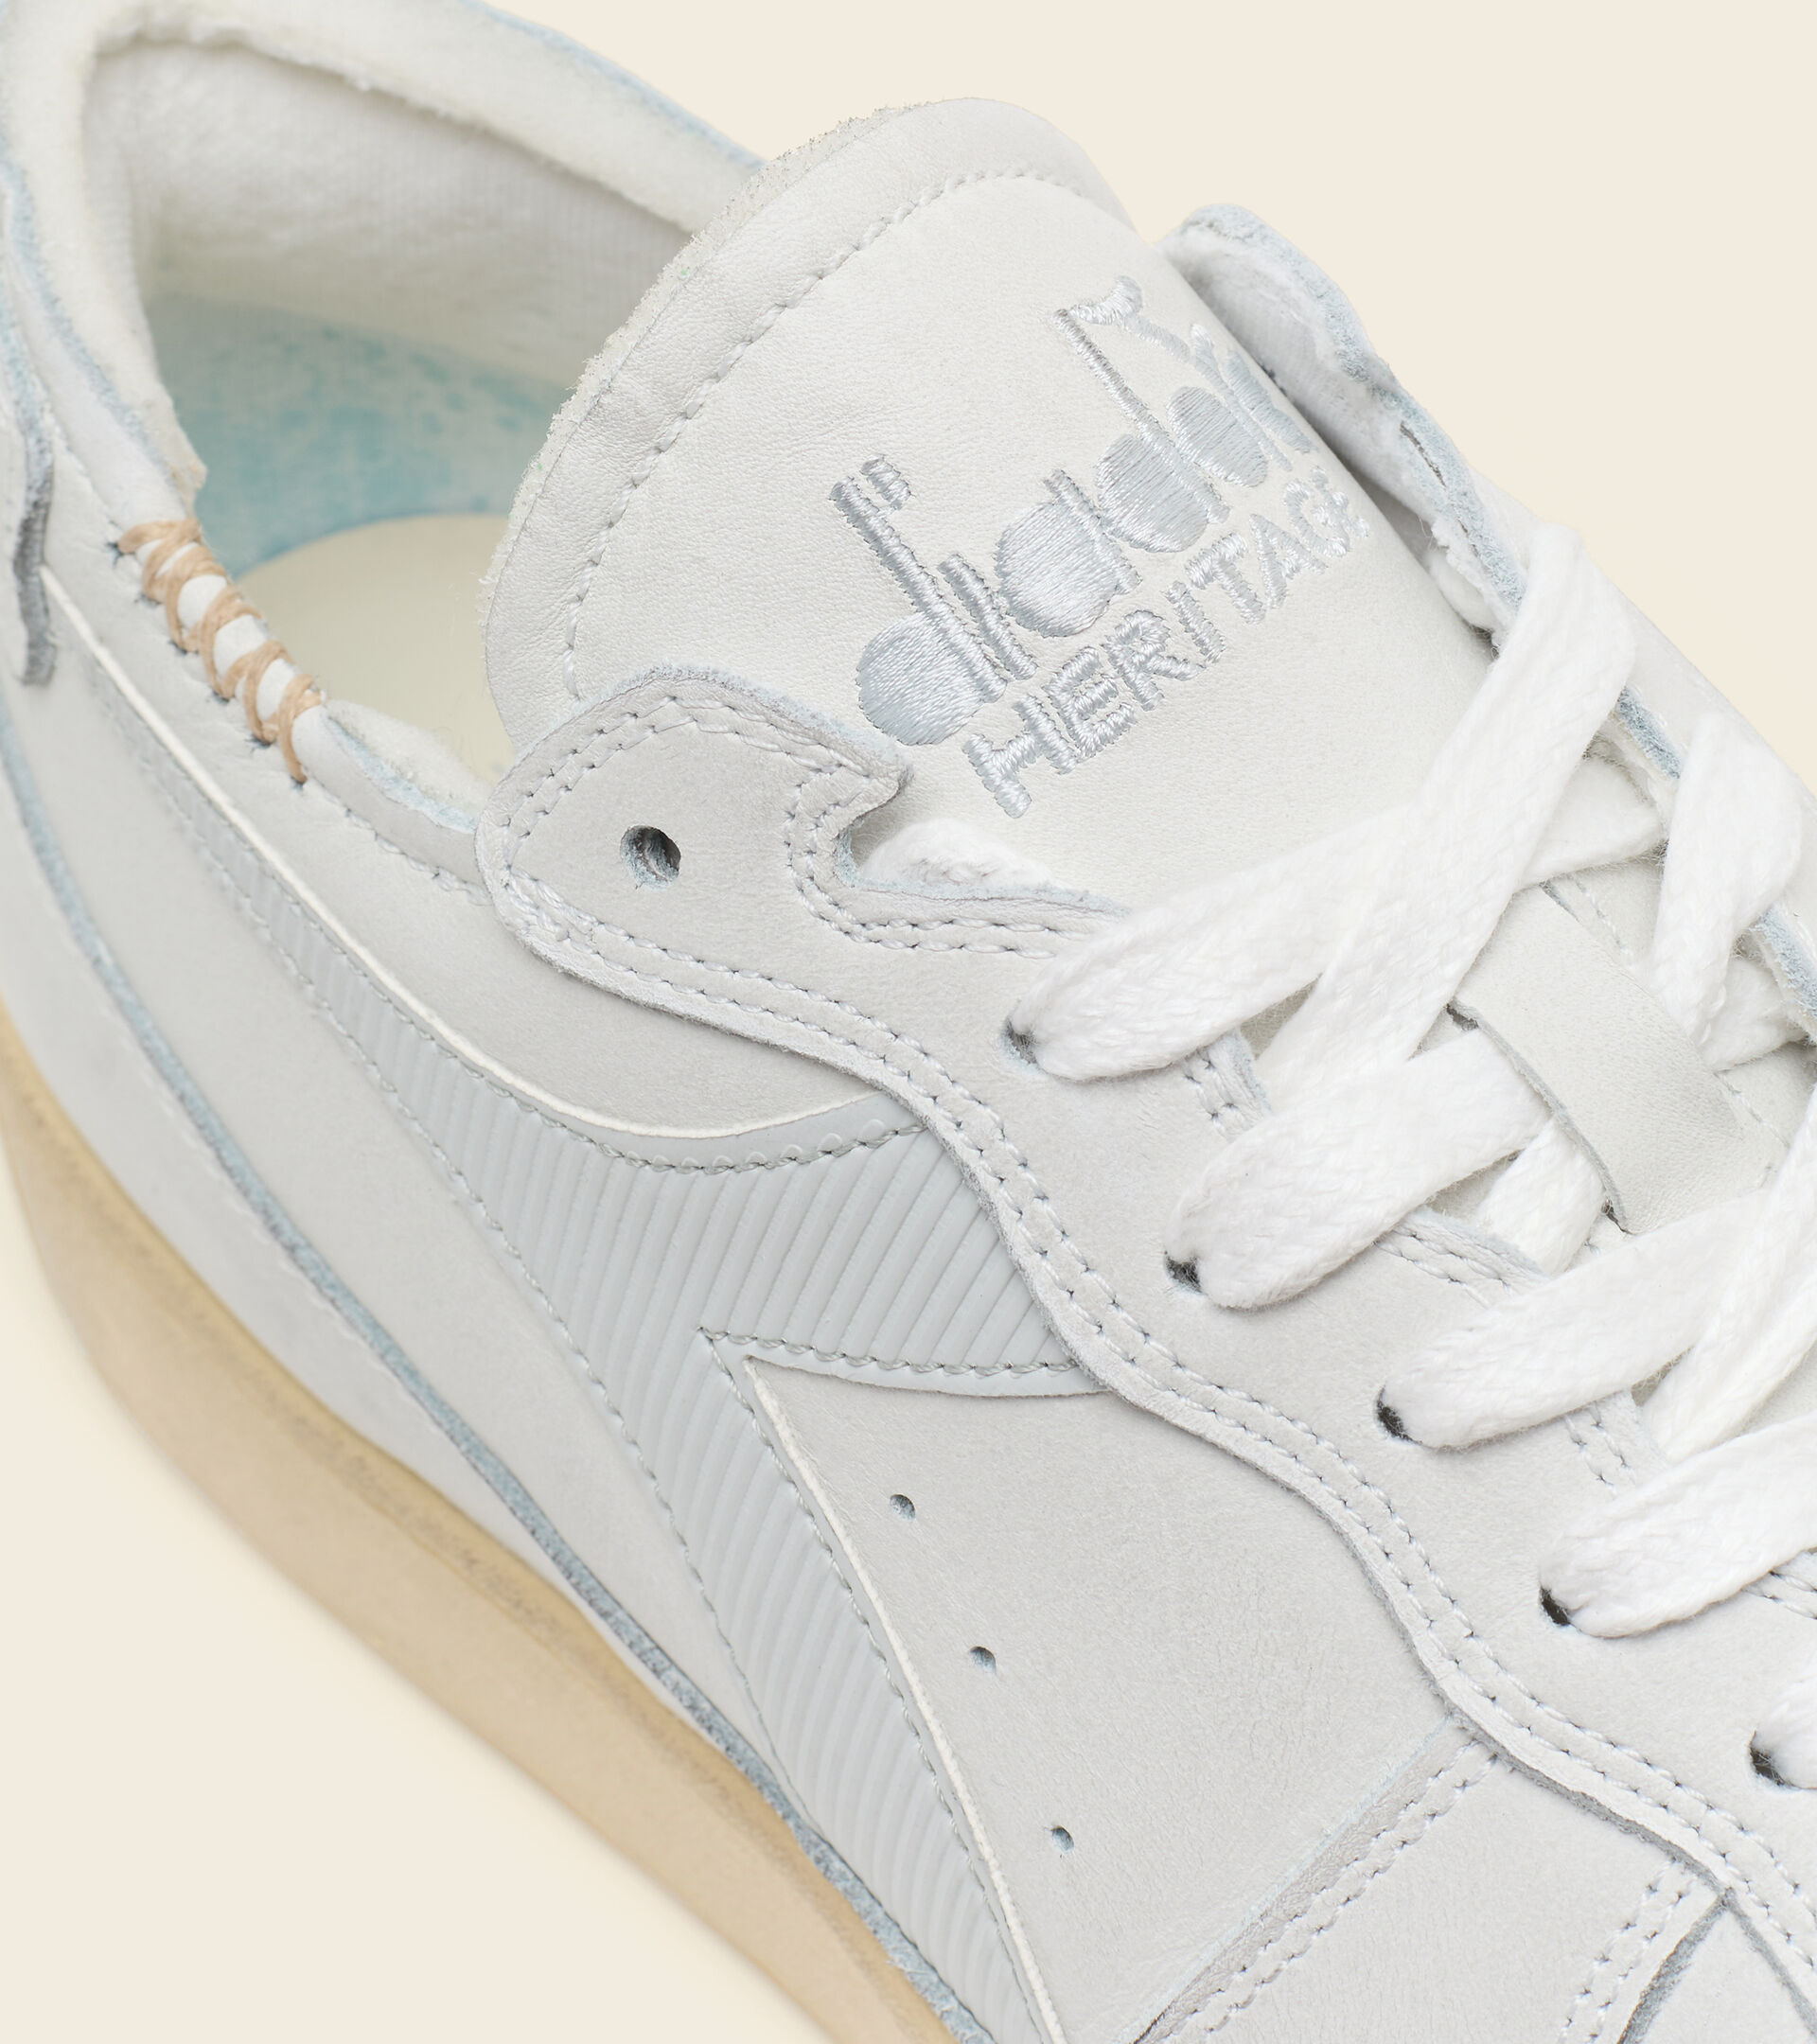 Heritage shoe - Gender Neutral MI BASKET ROW CUT WHITE/DAWN BLUE - Diadora